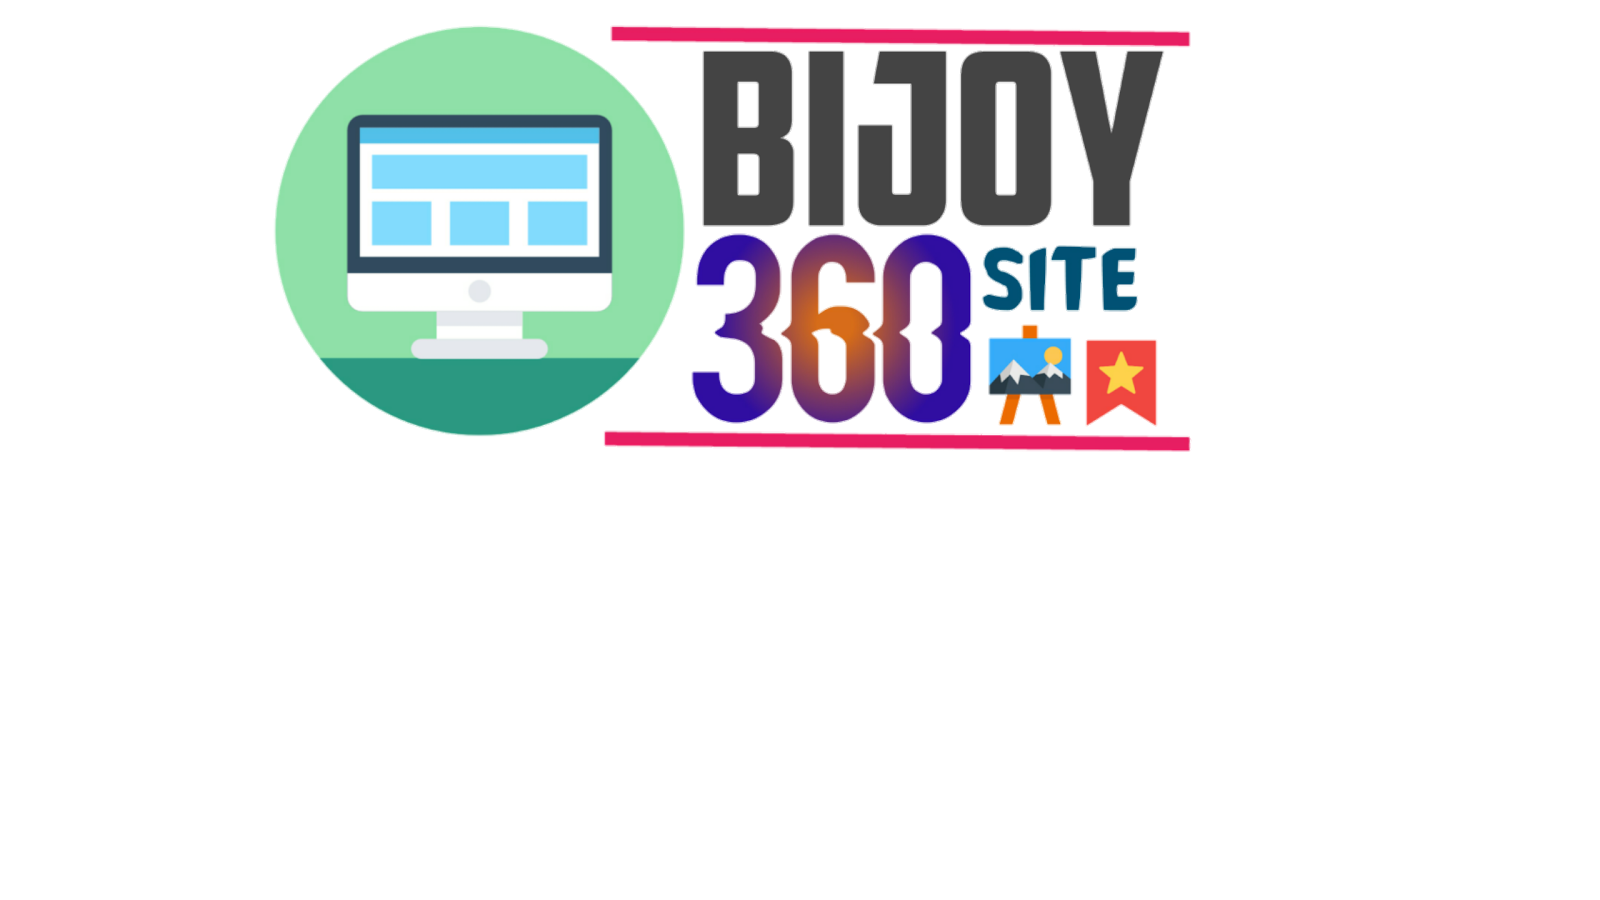 Bijoy360site